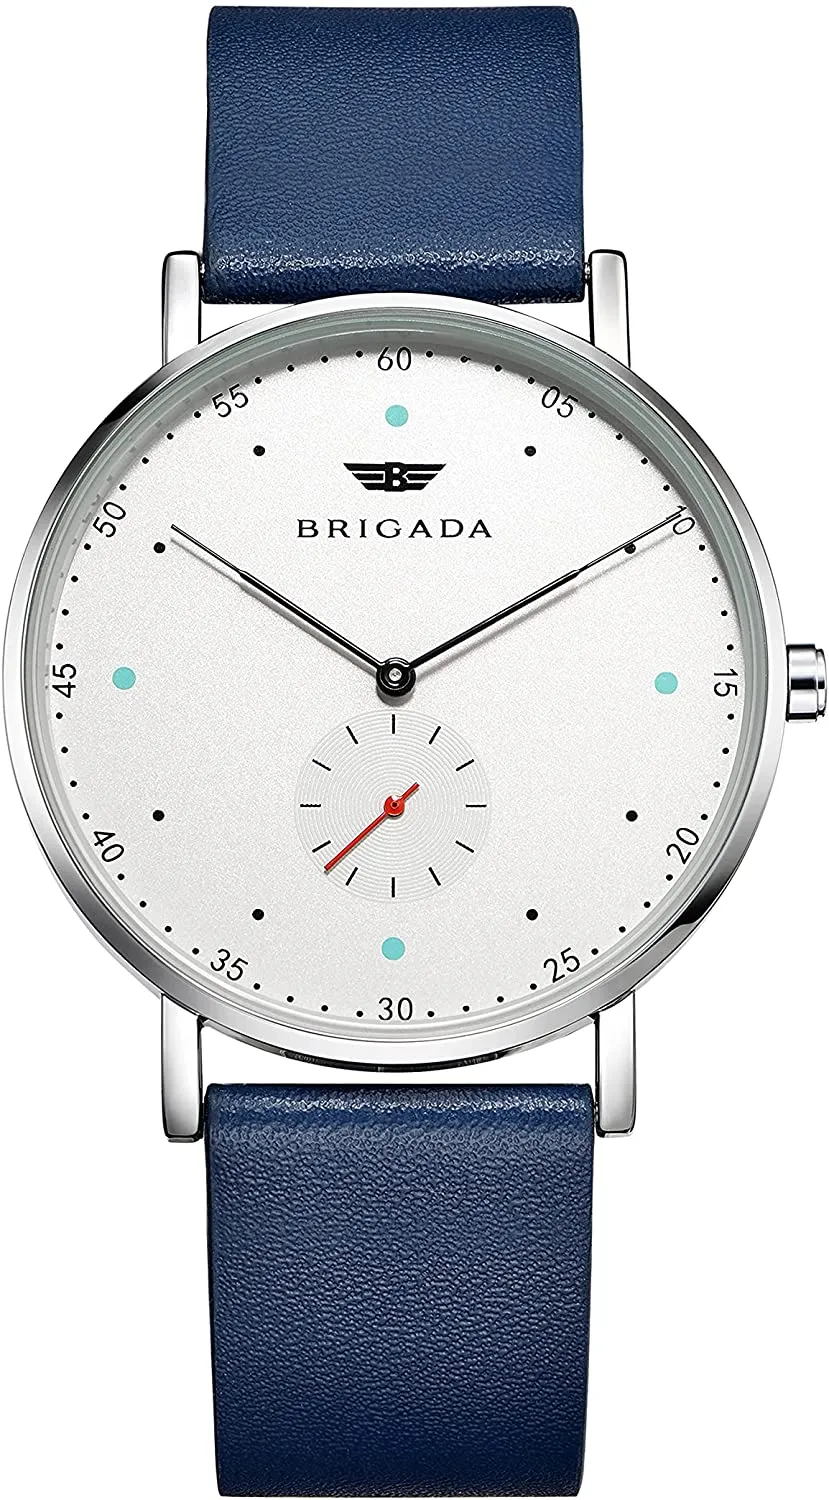  BRIGADA Men's Watches Classic Business Casual Black